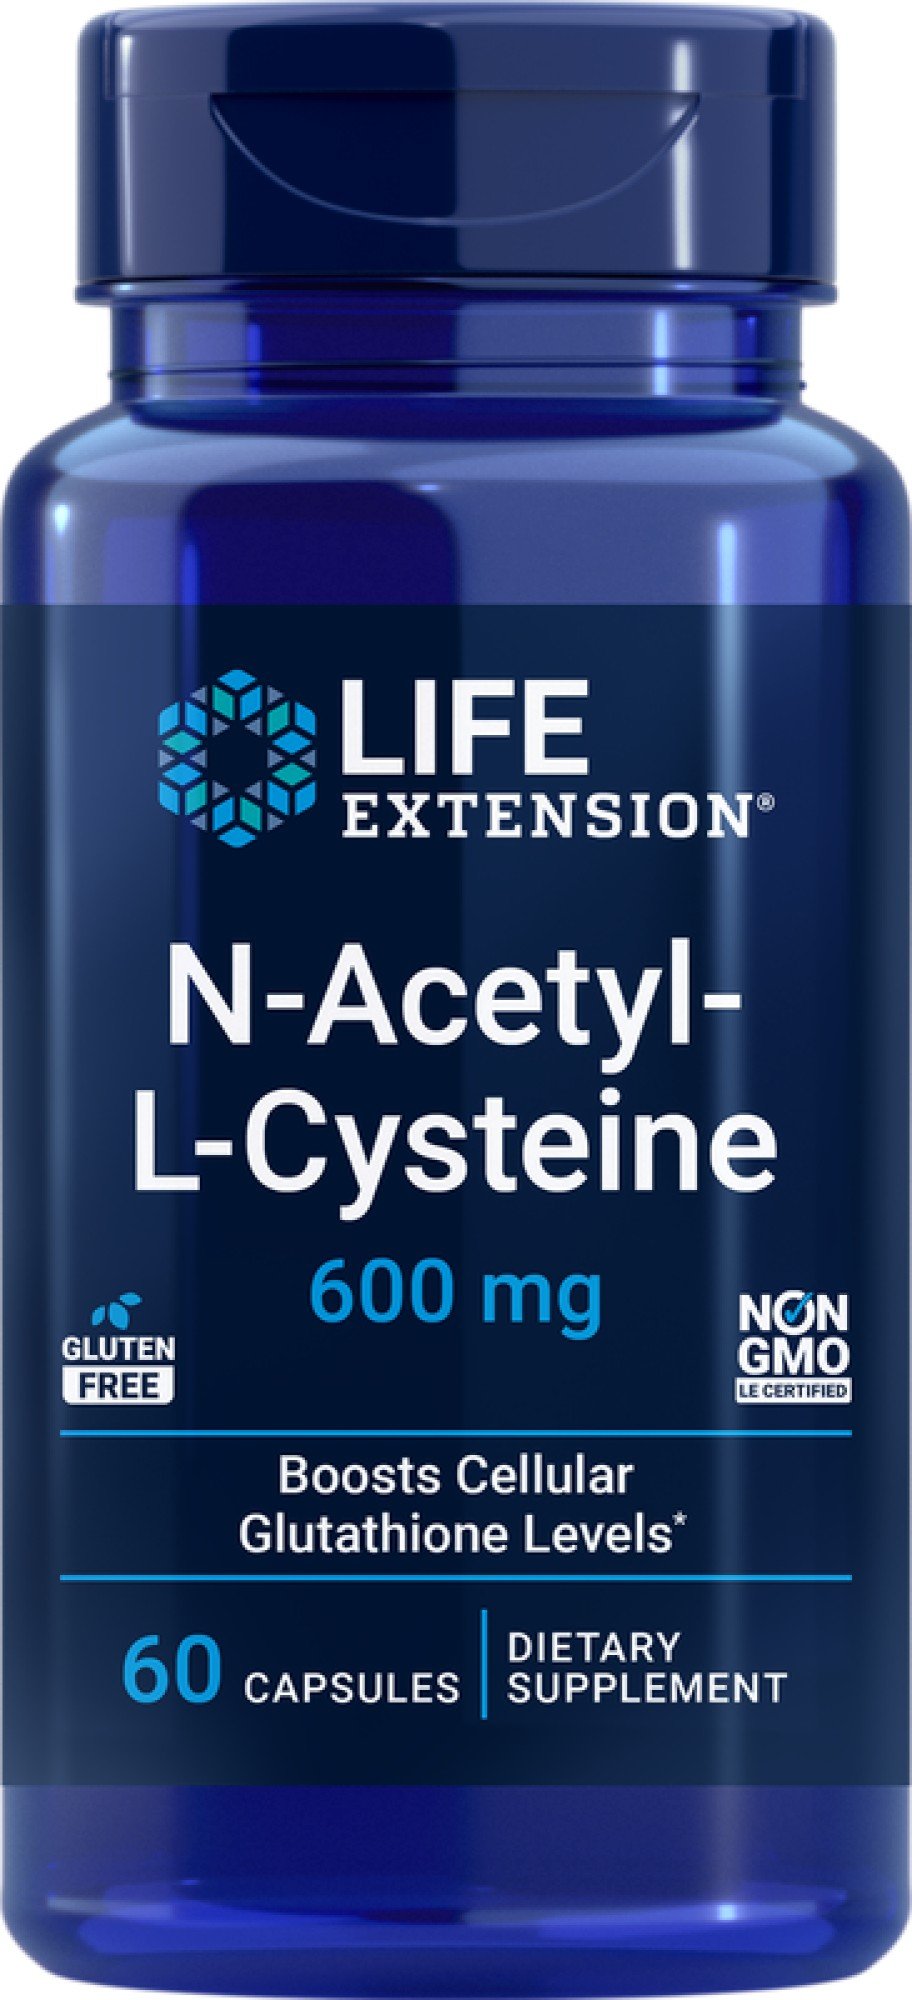 Life Extension N-Acetyl-L-Cysteine 600 mg 60 VegCap